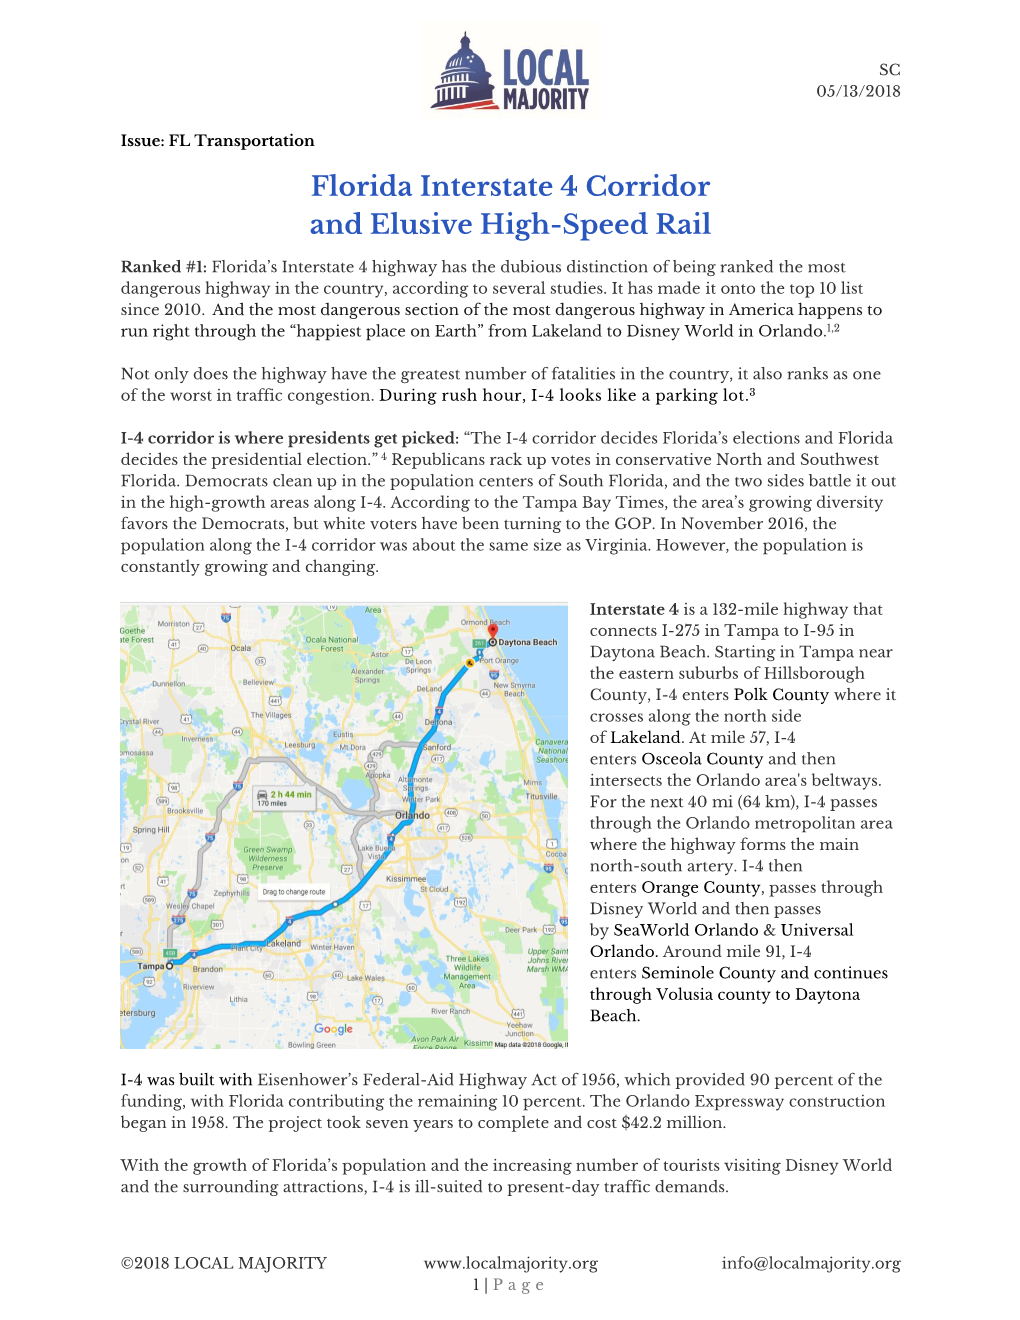 Florida Interstate 4 Corridor and Elusive High-Speed Rail